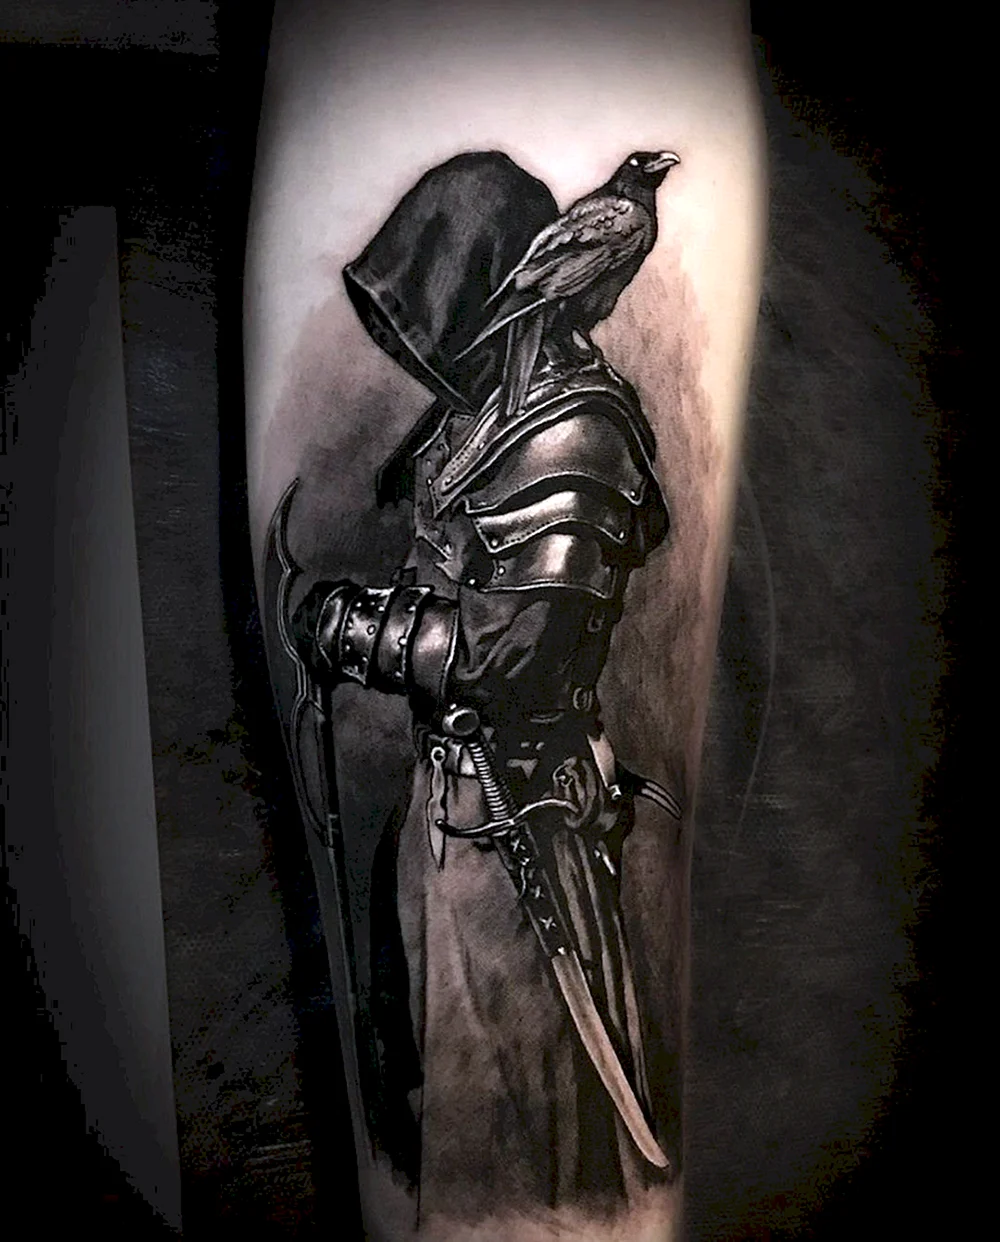 Blacksmith Tattoo